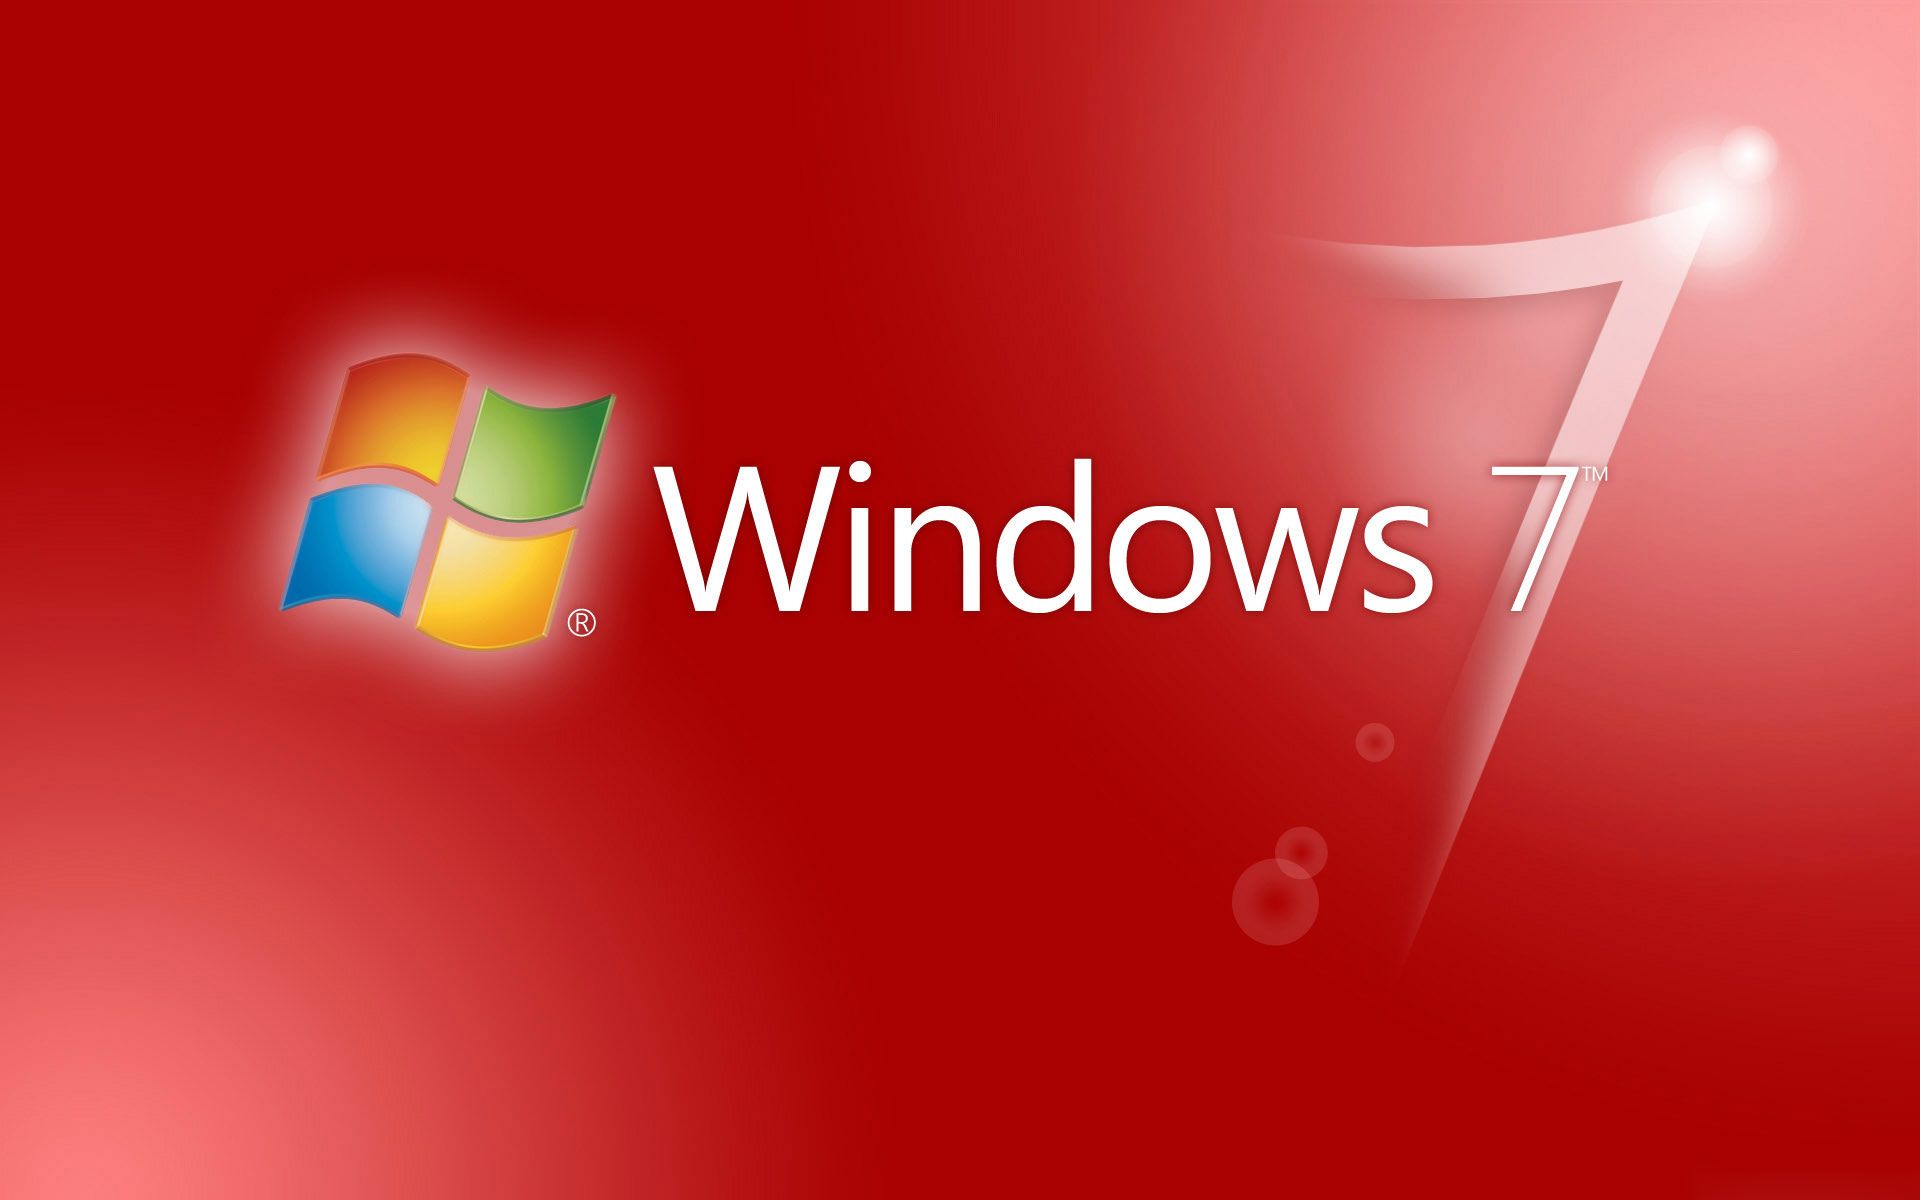 Desktop Wallpaper Gallery Windows 7 windows 7 - Red sunrise